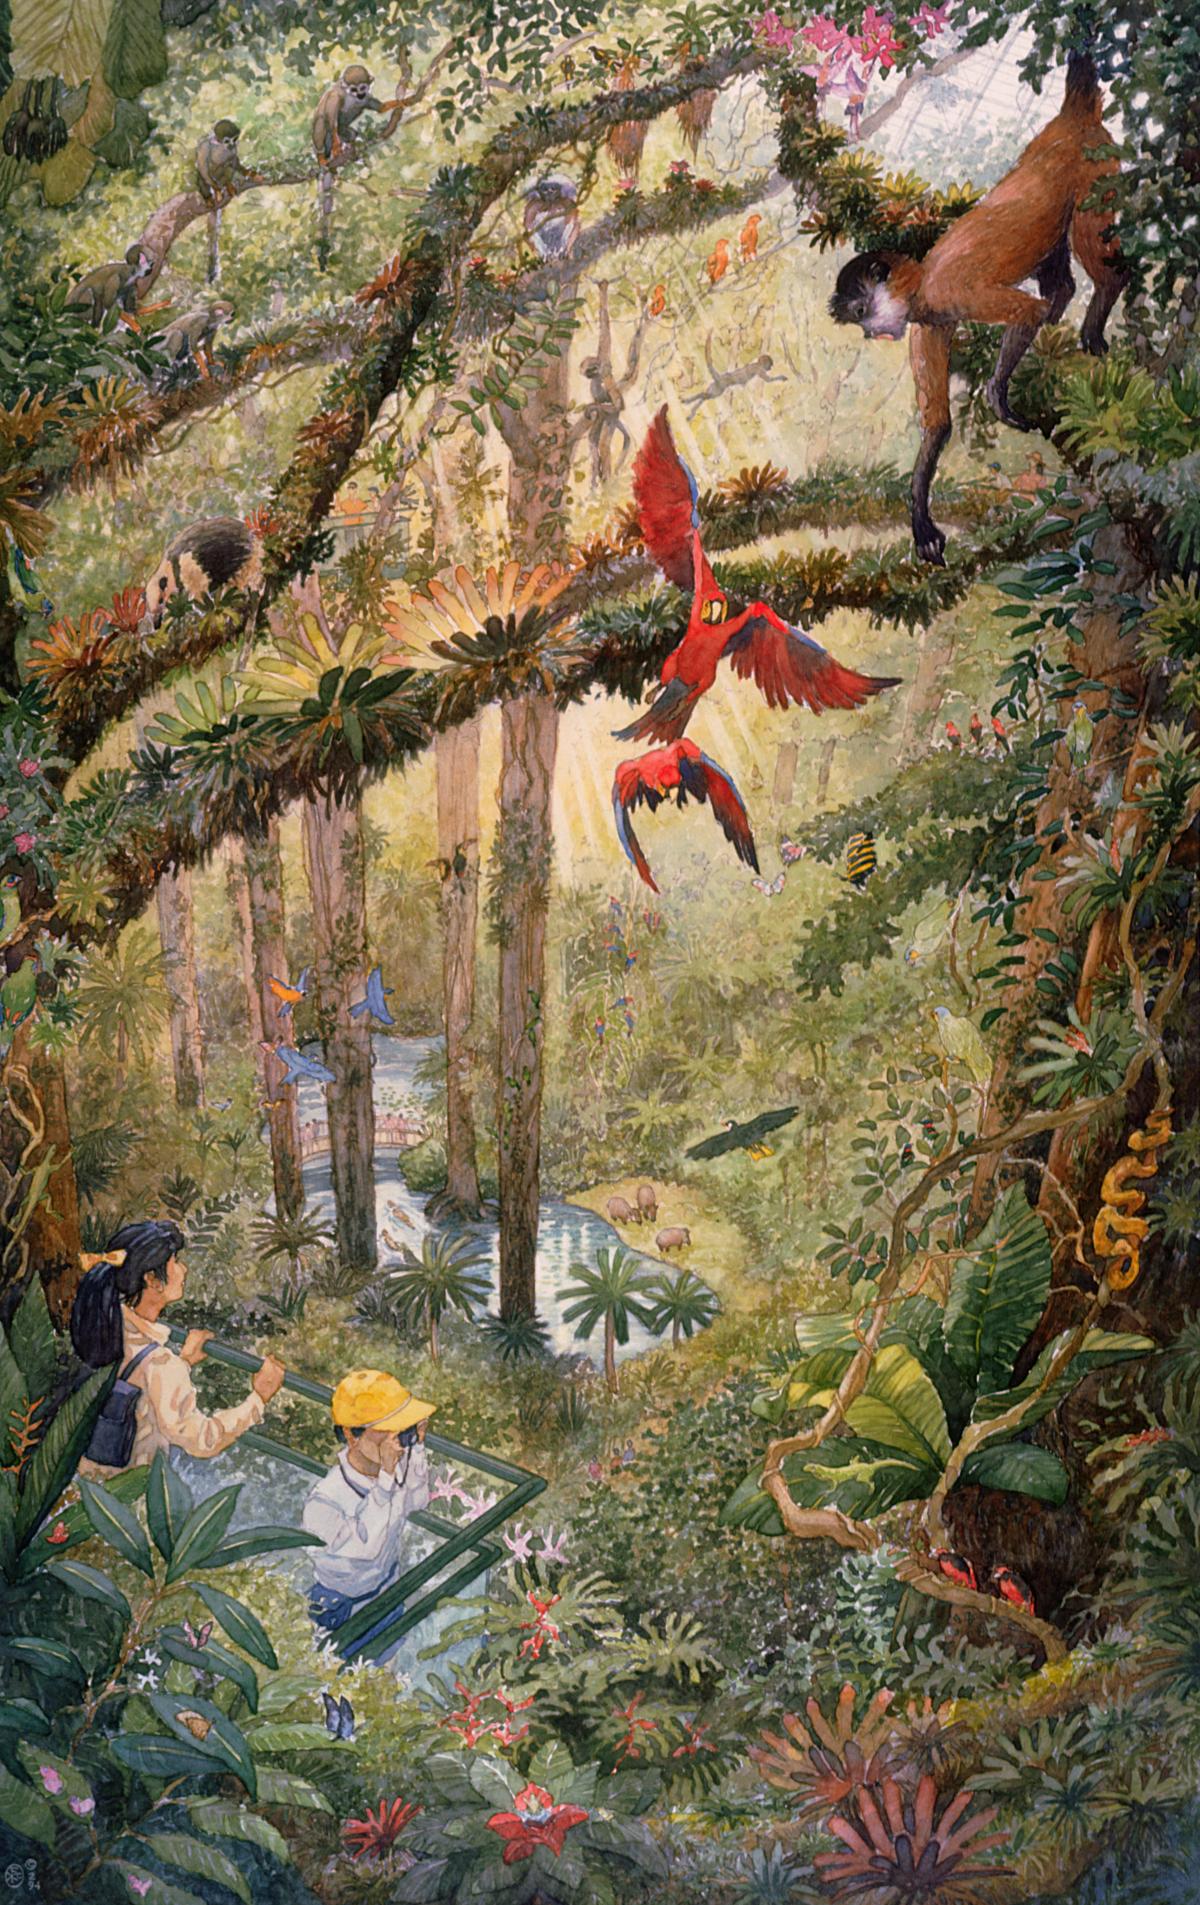 Tsuruhama Rainforest Pavillion - watercolor landscape illustration painting by Frank Costantino